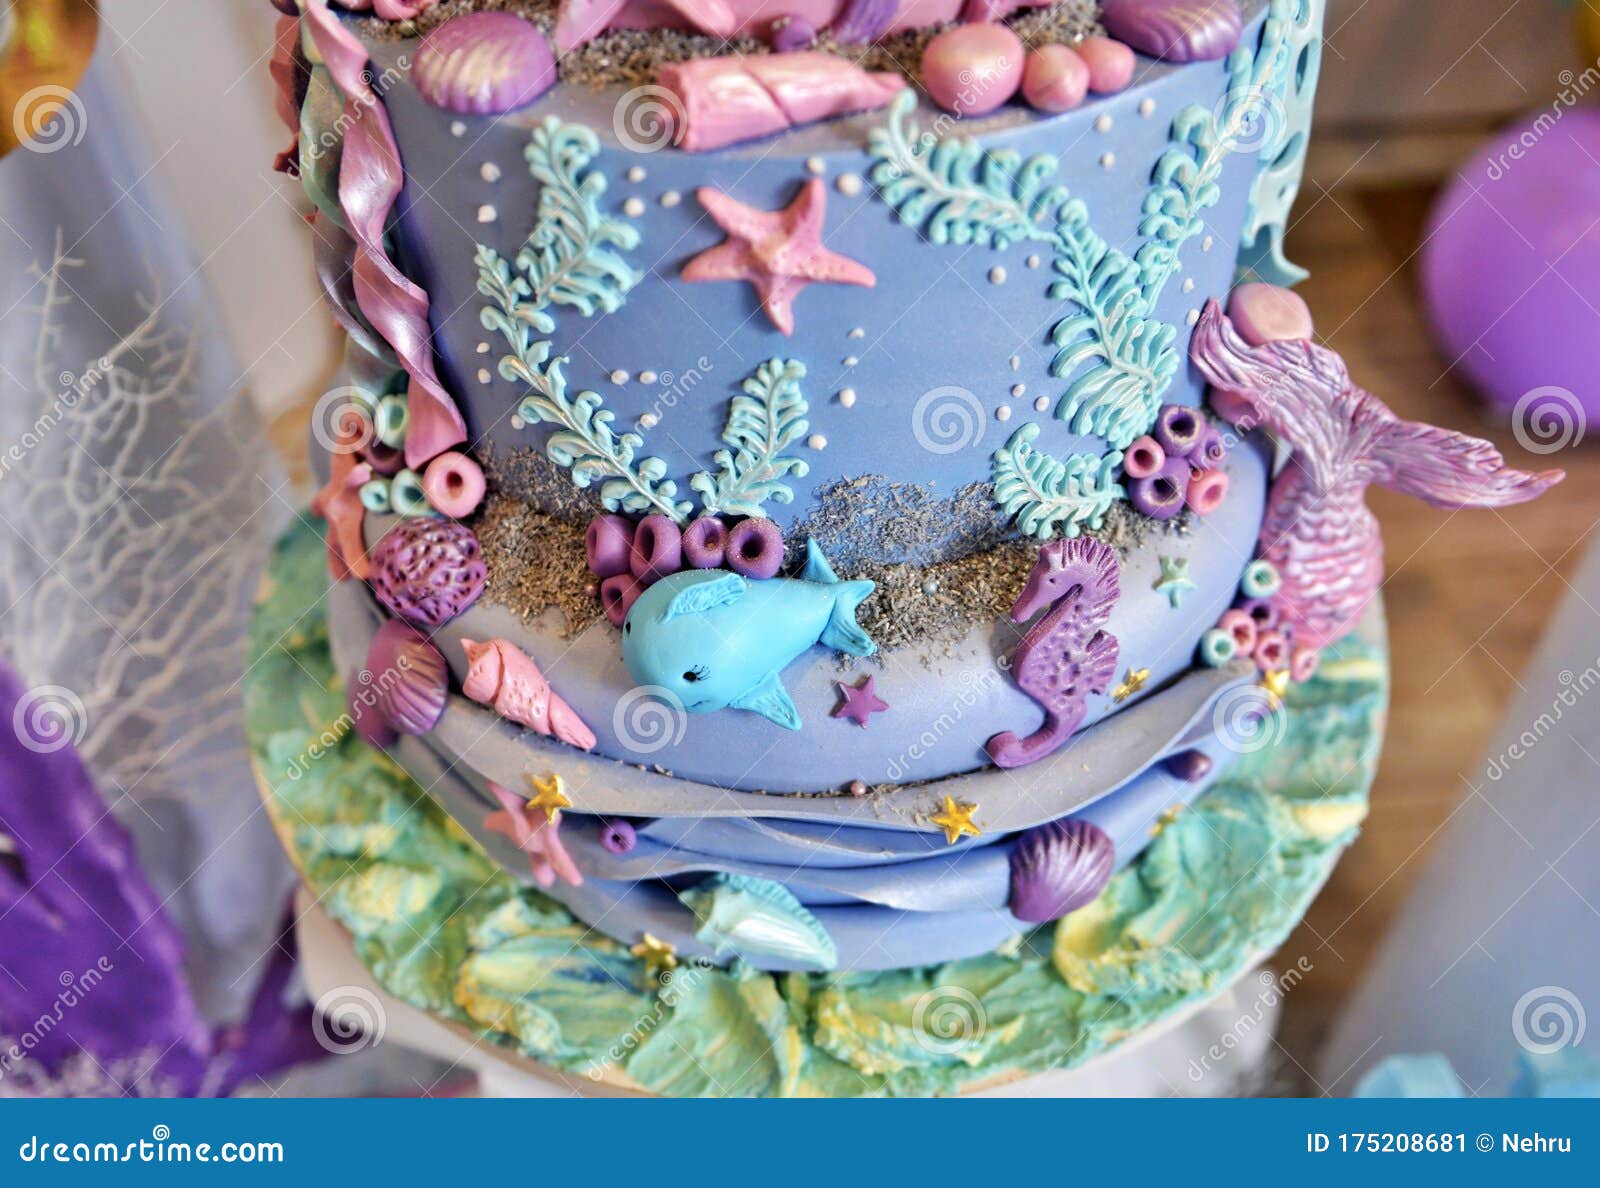 Baby Girl Genuine Birthday Cake, Sea Life Theme Stock Image ...